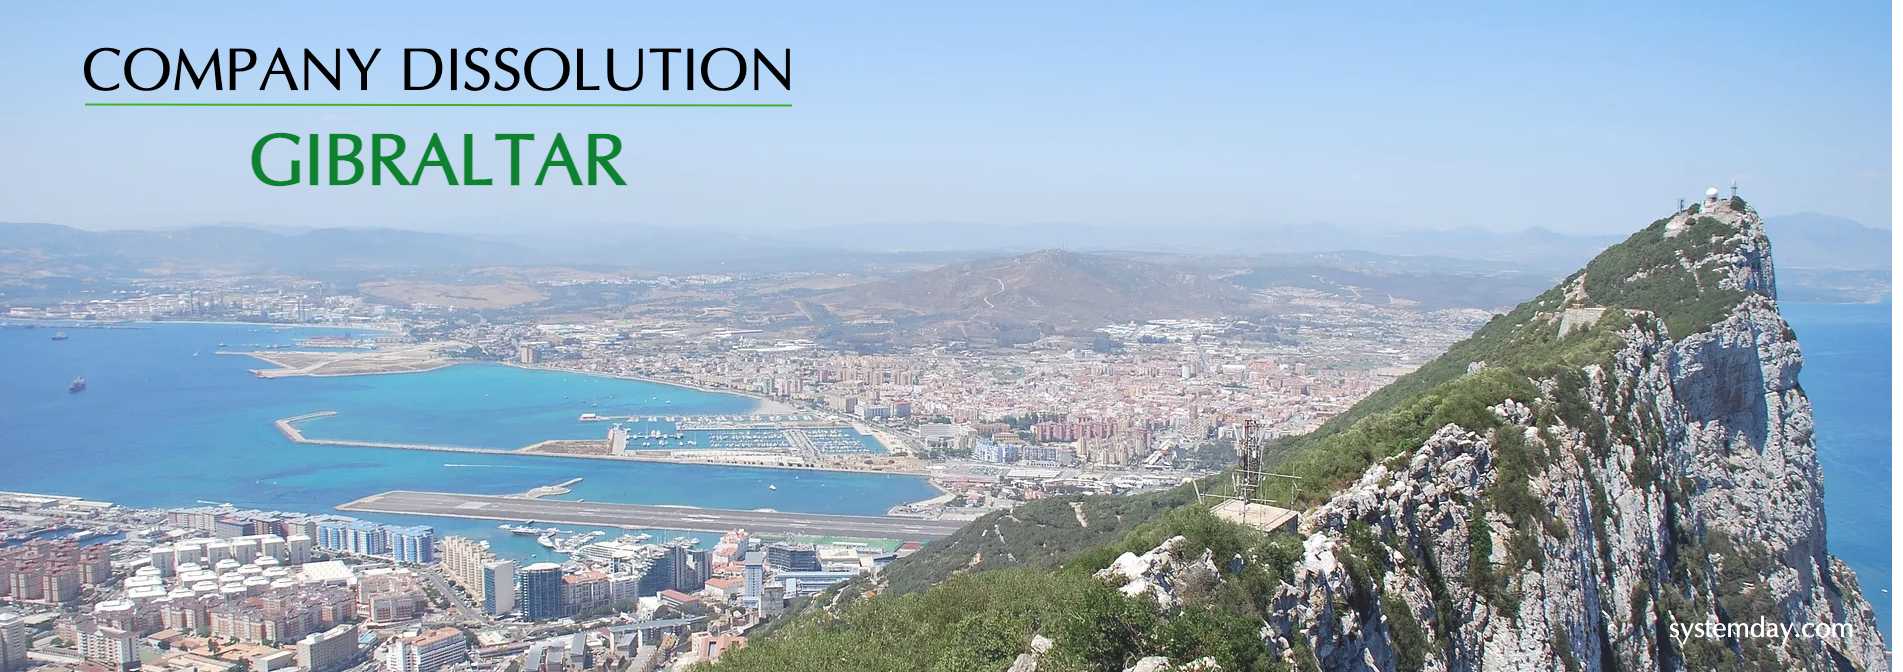 Gibraltar Company Dissolution